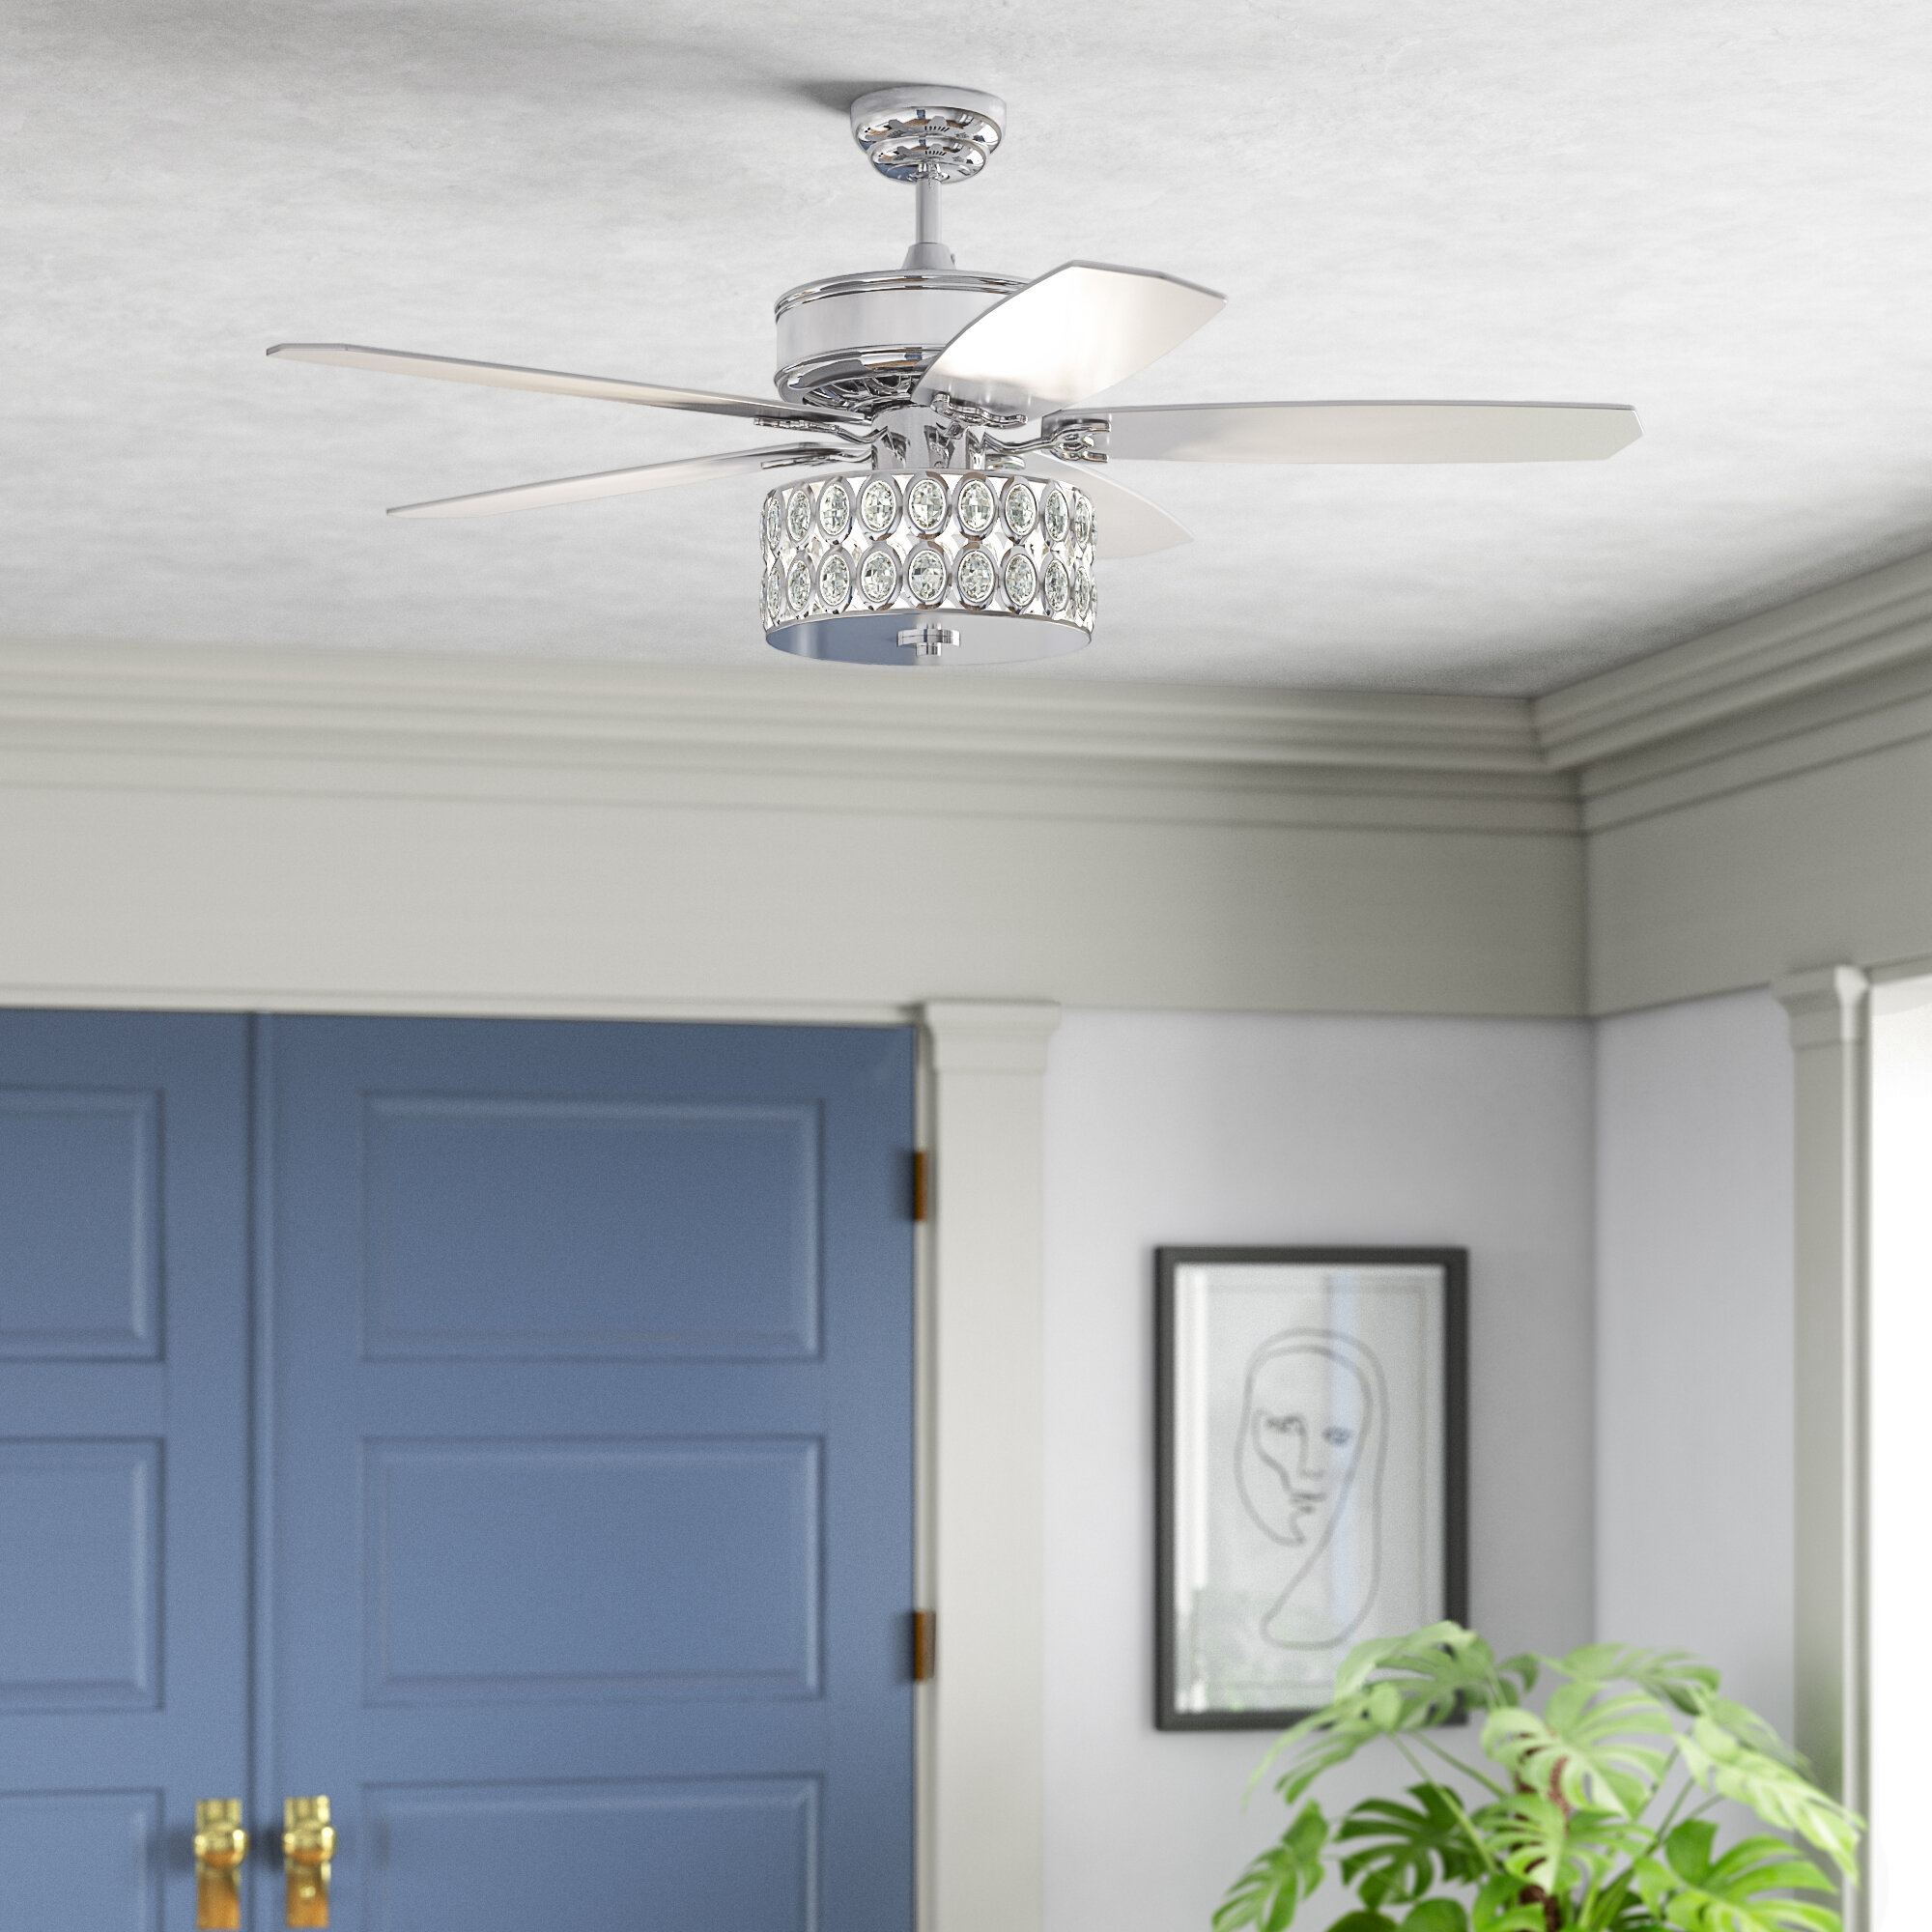 House of Hampton® Damori 52'' Ceiling Fan with Light Kit & Reviews